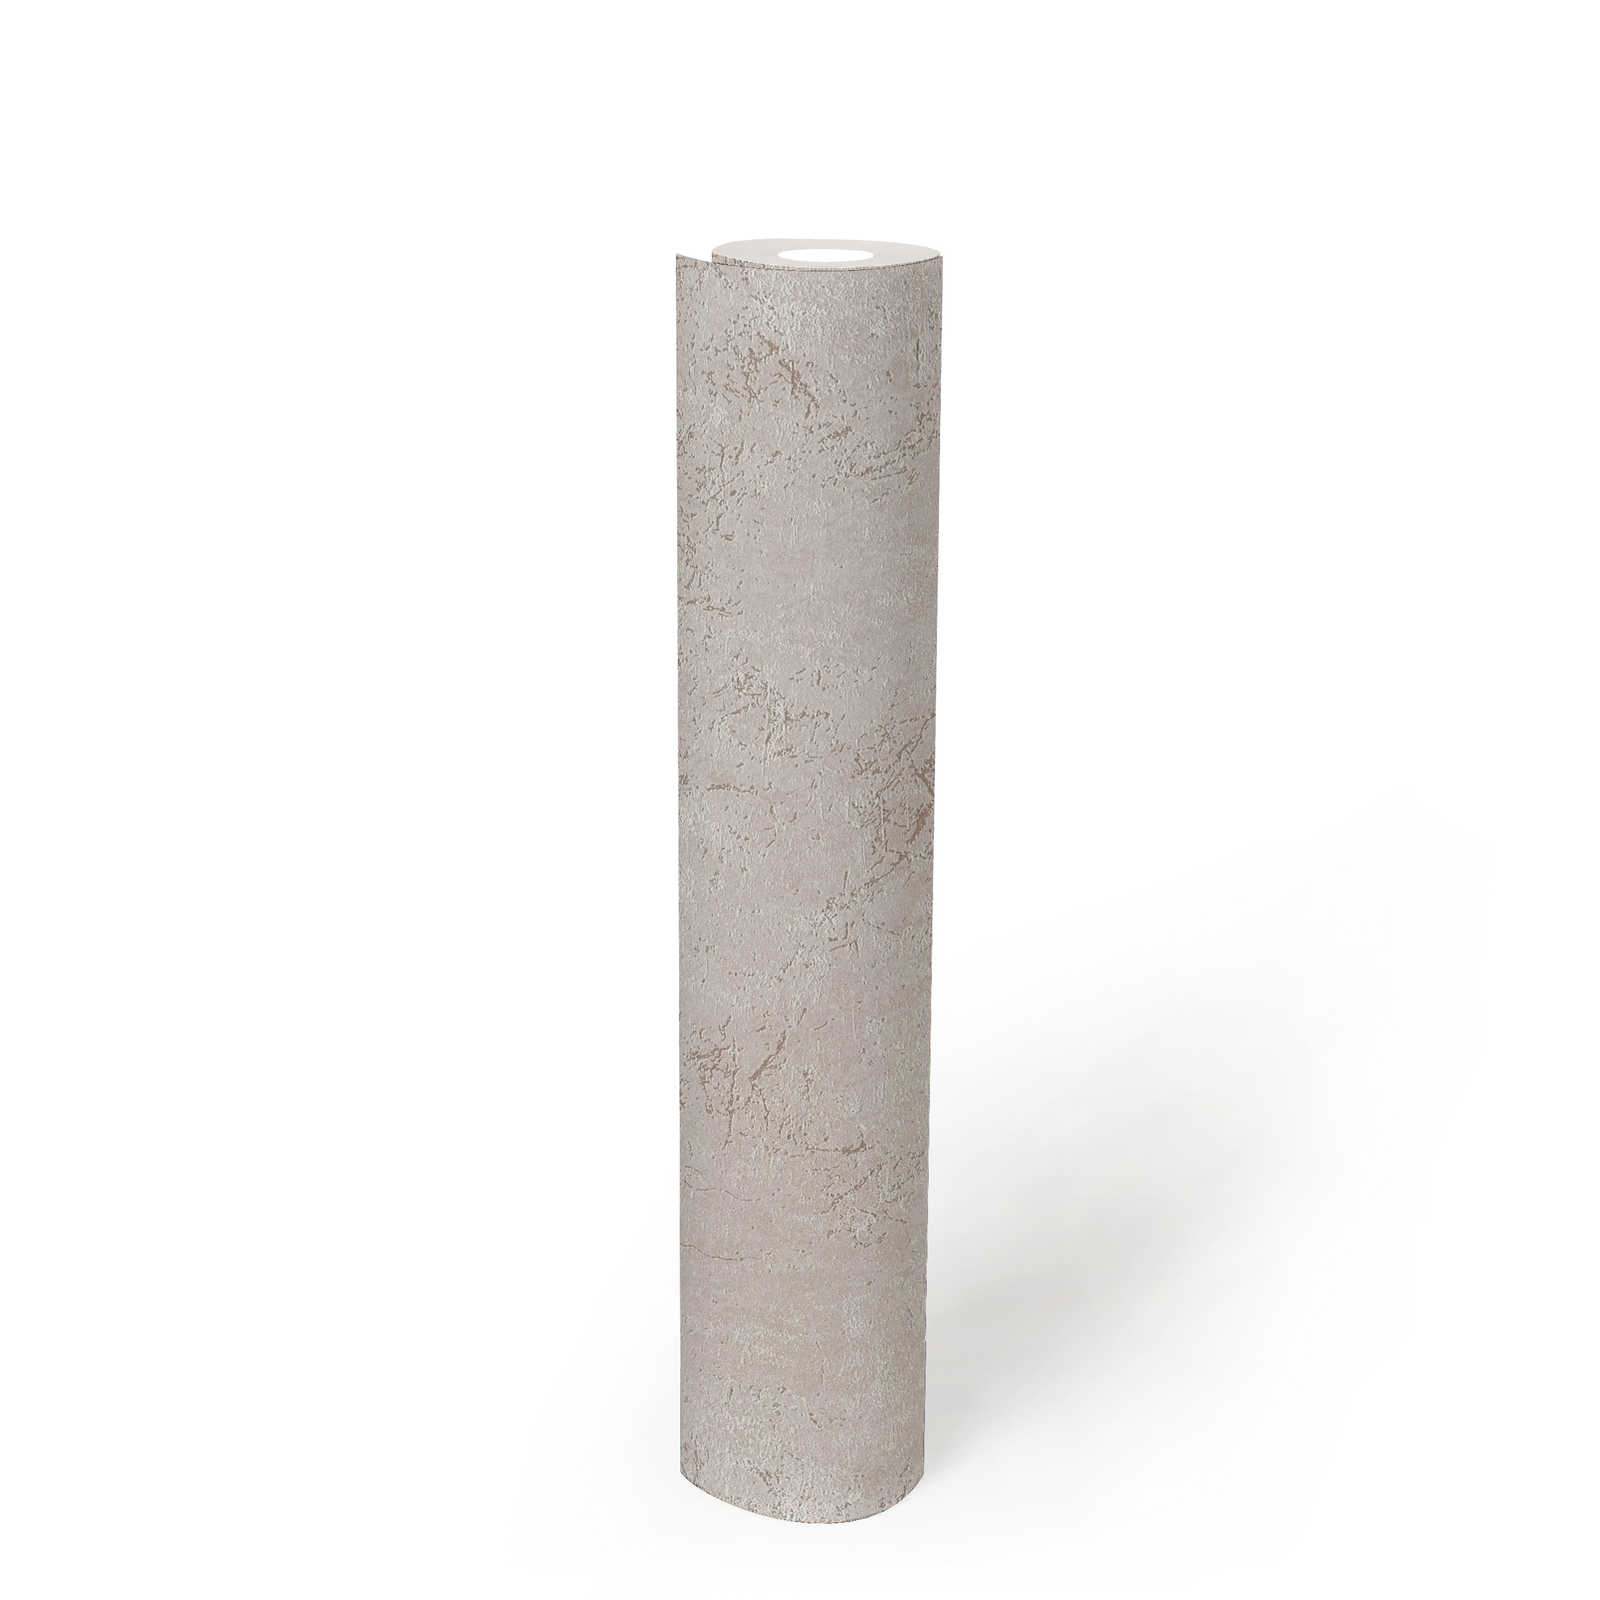             Light grey wallpaper concrete look texture pattern, matte
        